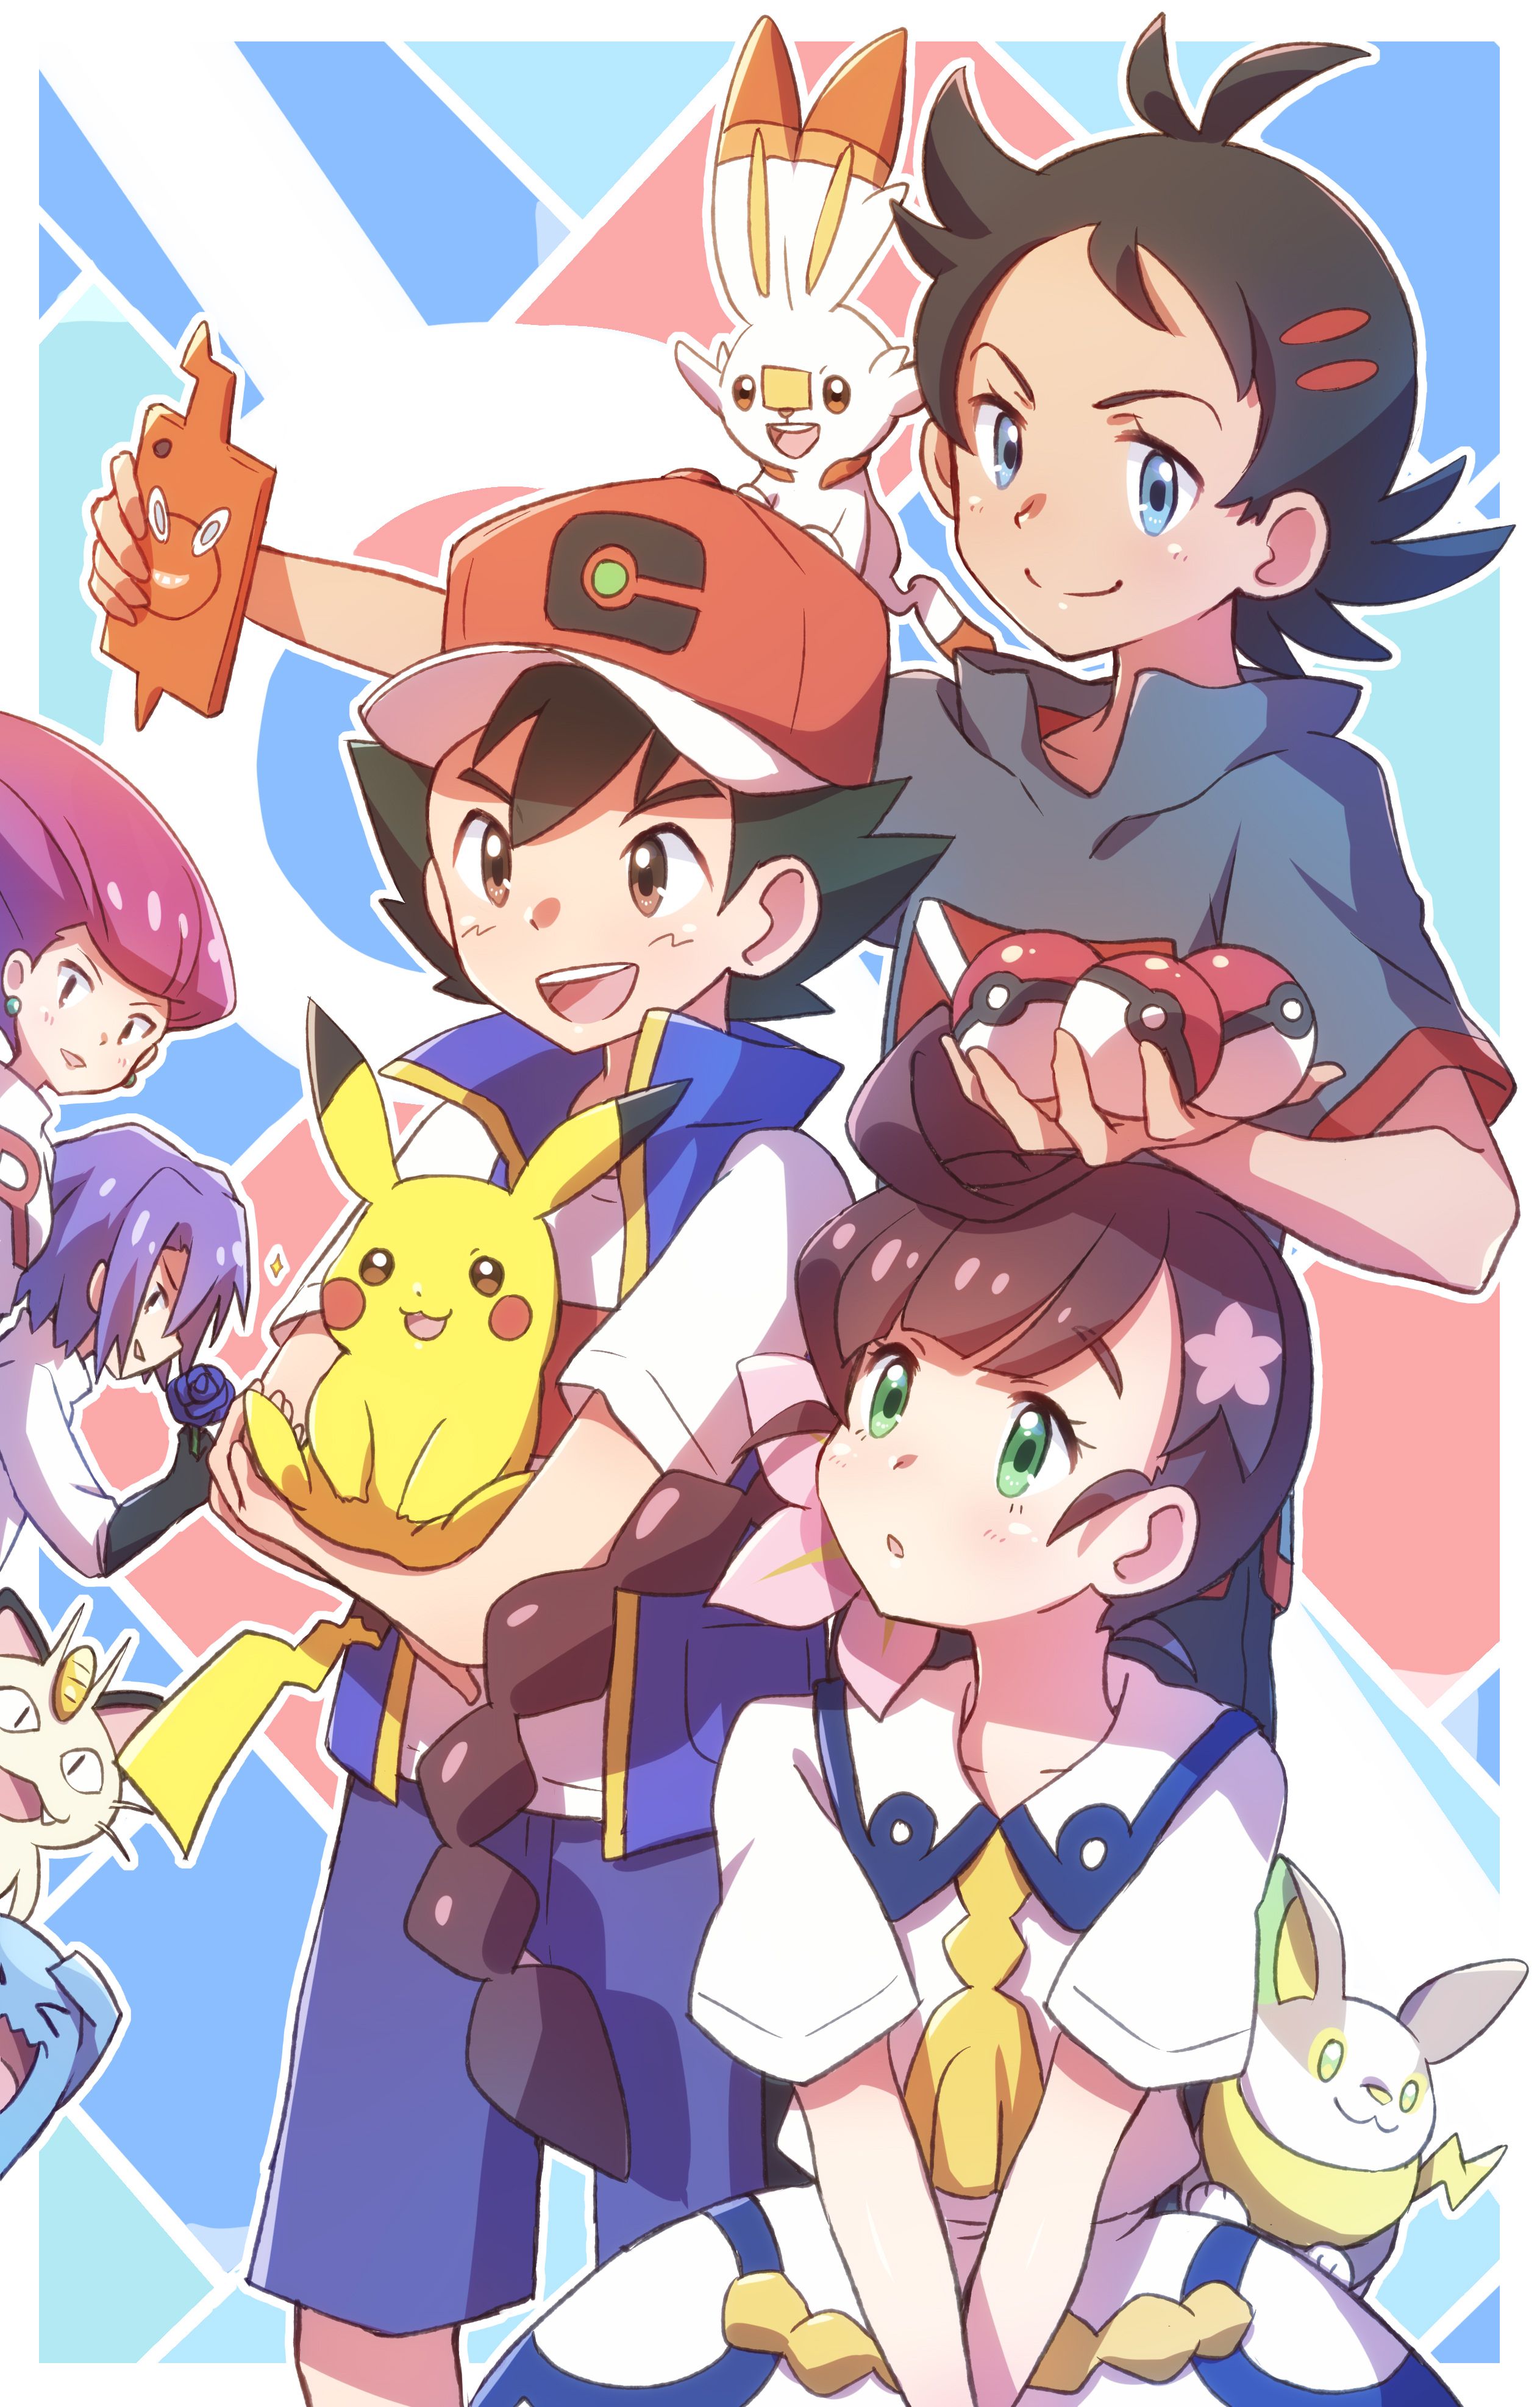 Gou (Pokémon)émon (Anime) Anime Image Board